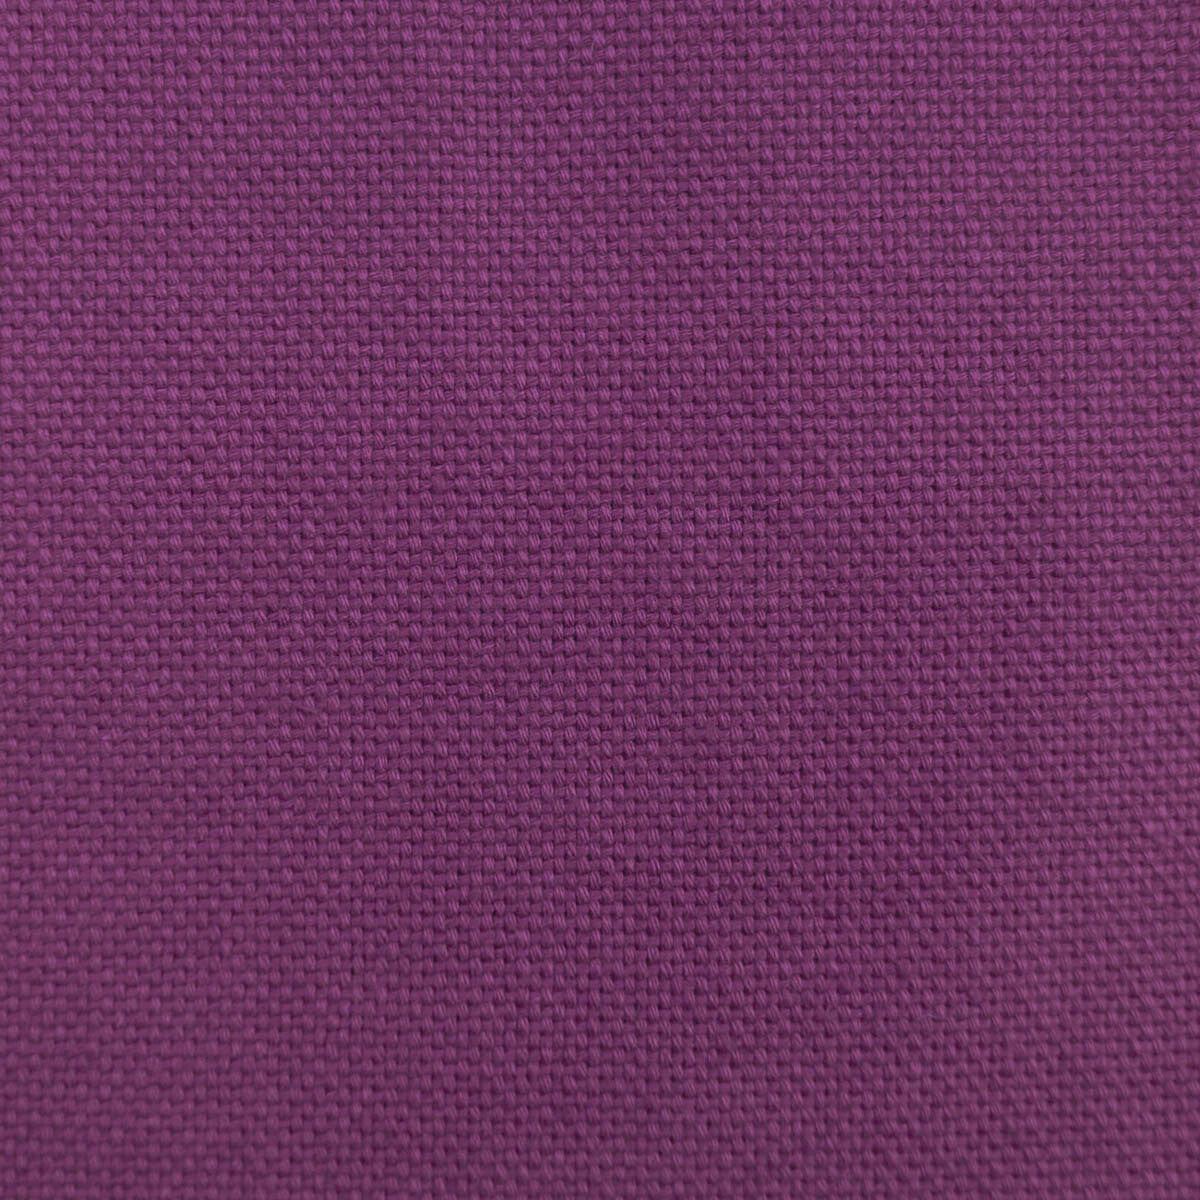 Dobra fabric in morado color - pattern LCT1075.035.0 - by Gaston y Daniela in the Lorenzo Castillo VII The Rectory collection